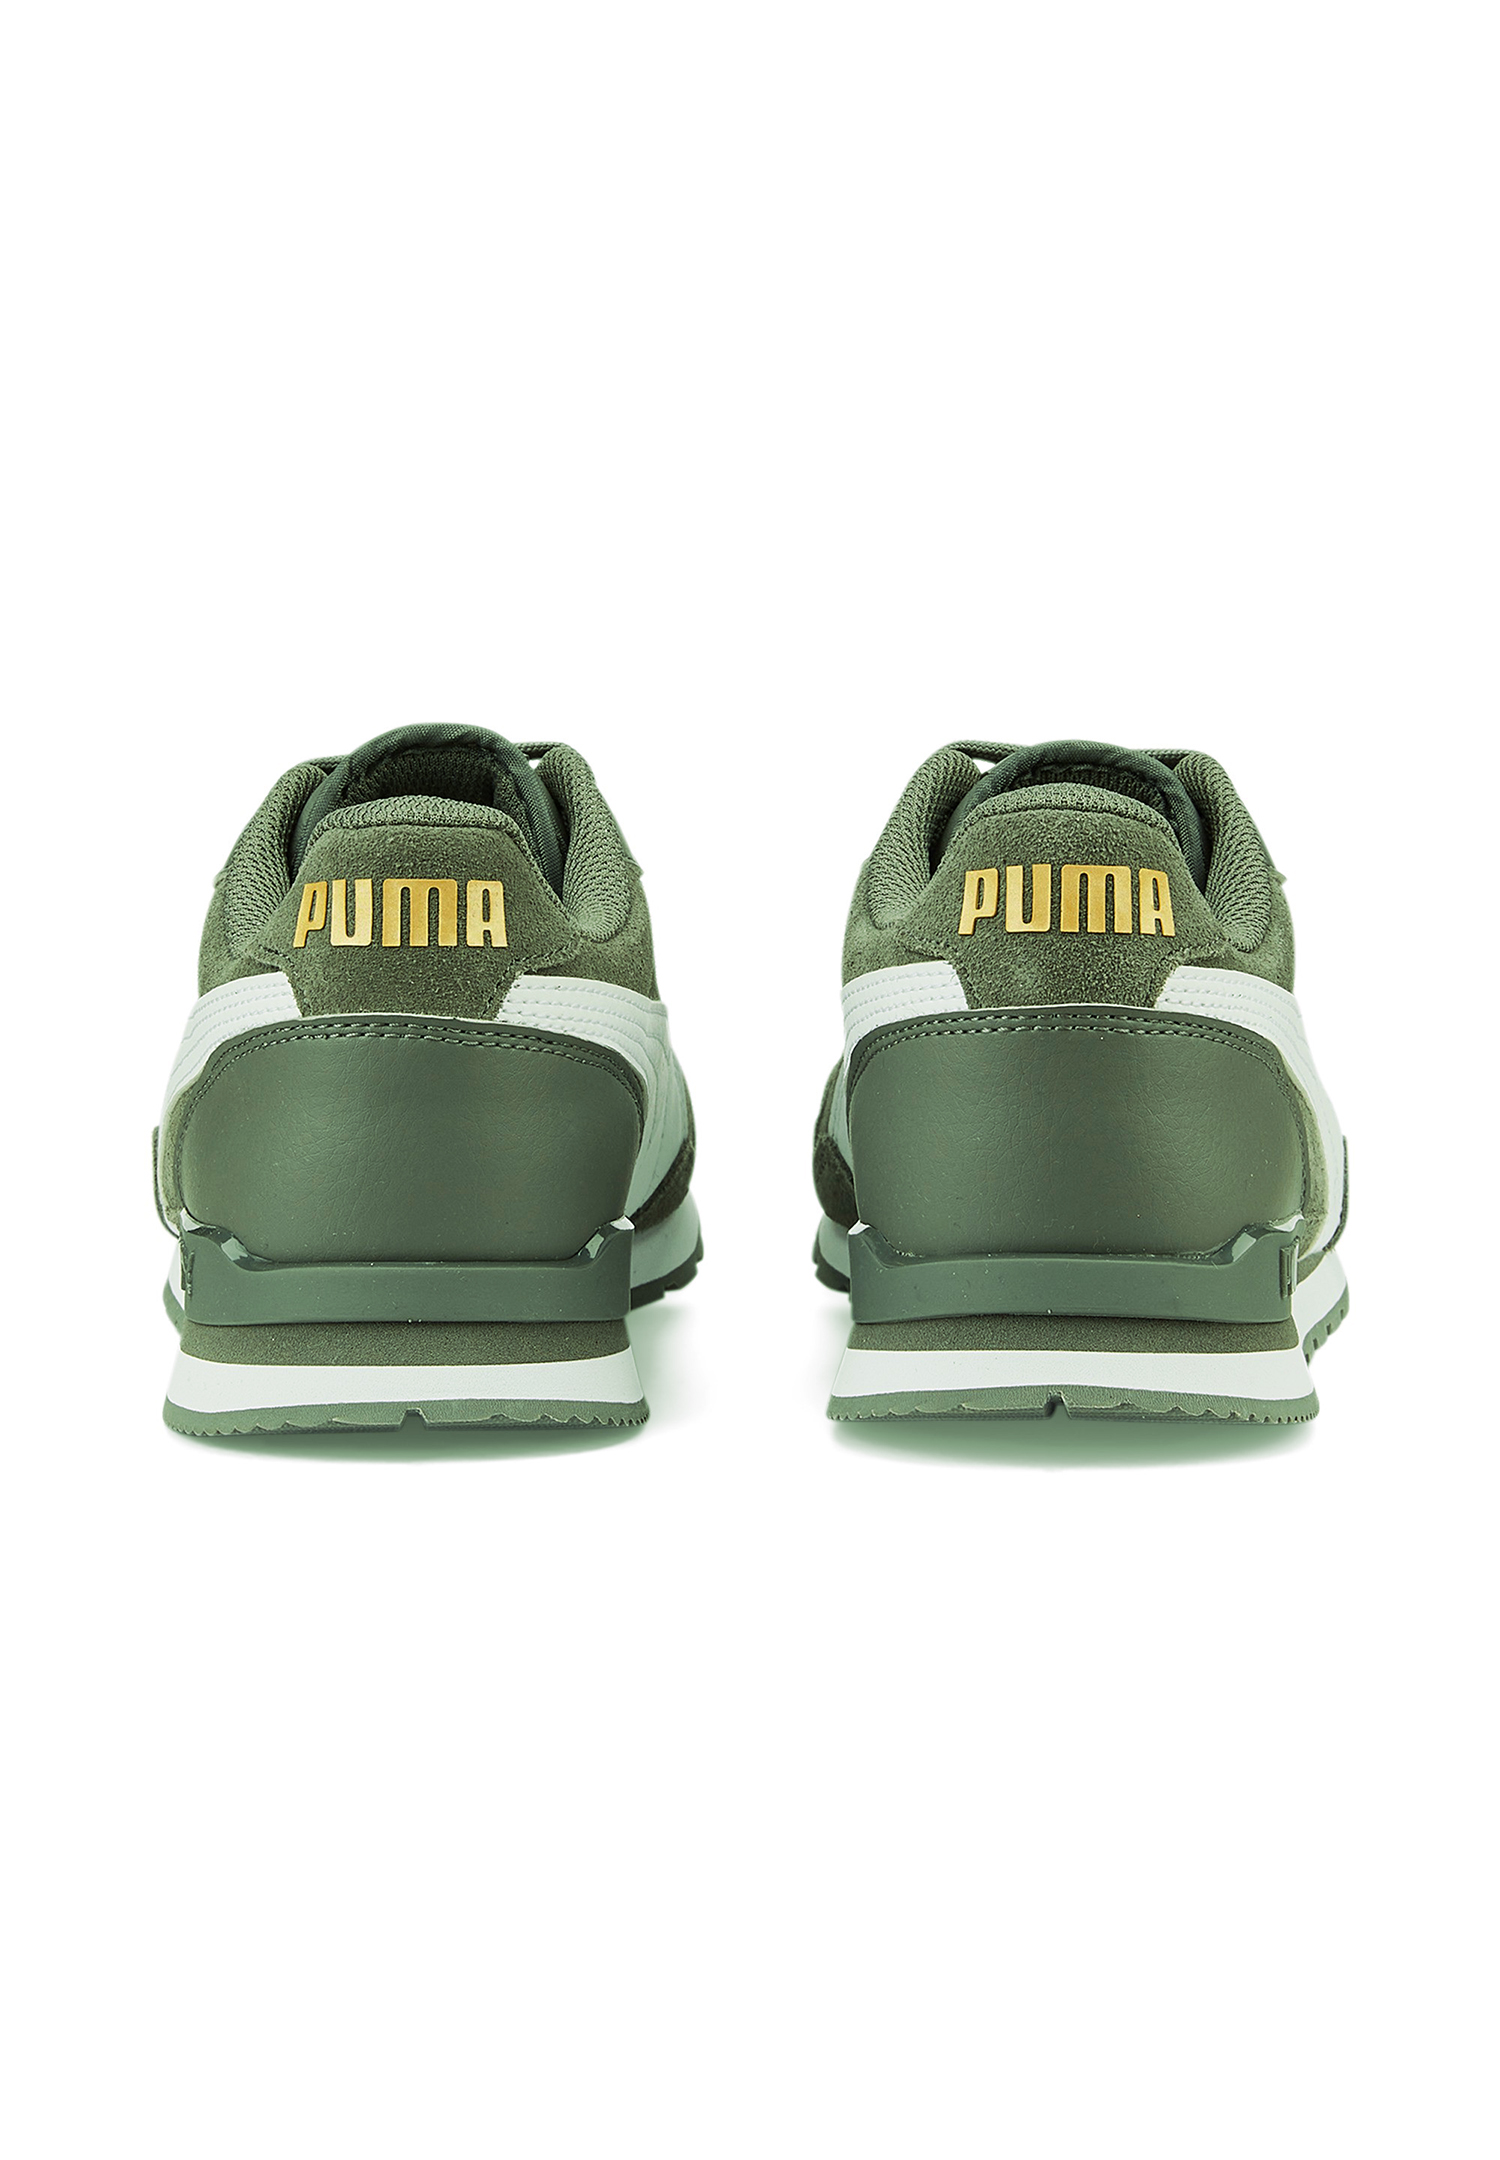 Puma ST Runner v3 SD Sneaker Schuhe 387646 04 Herren Schuhe grün